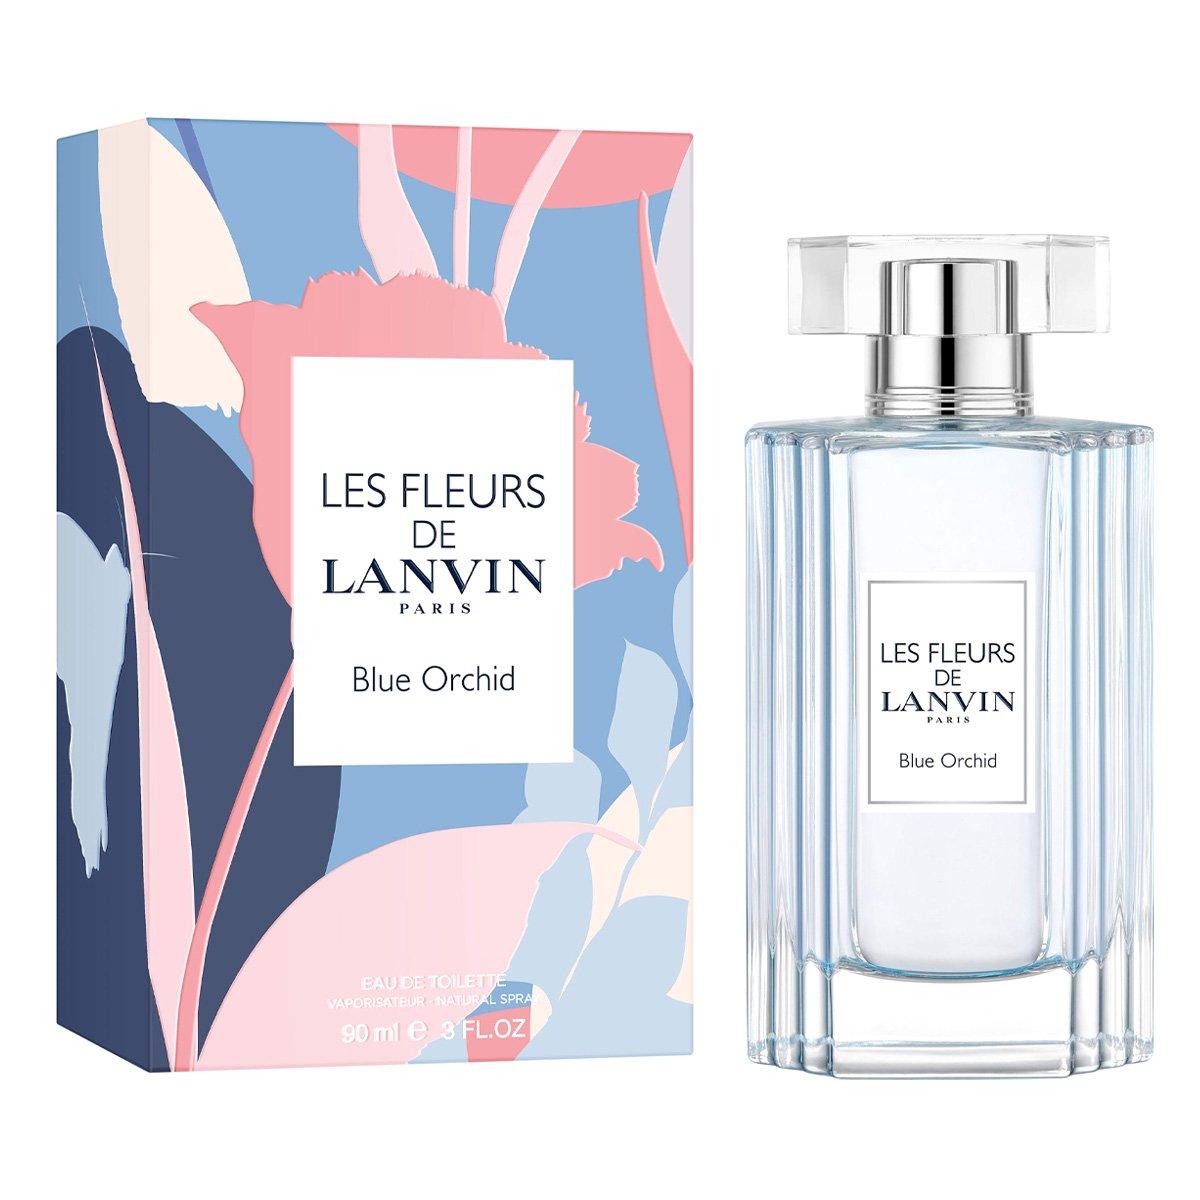 LANVIN - Blue Orchid 90ml (LUX EUROPE)